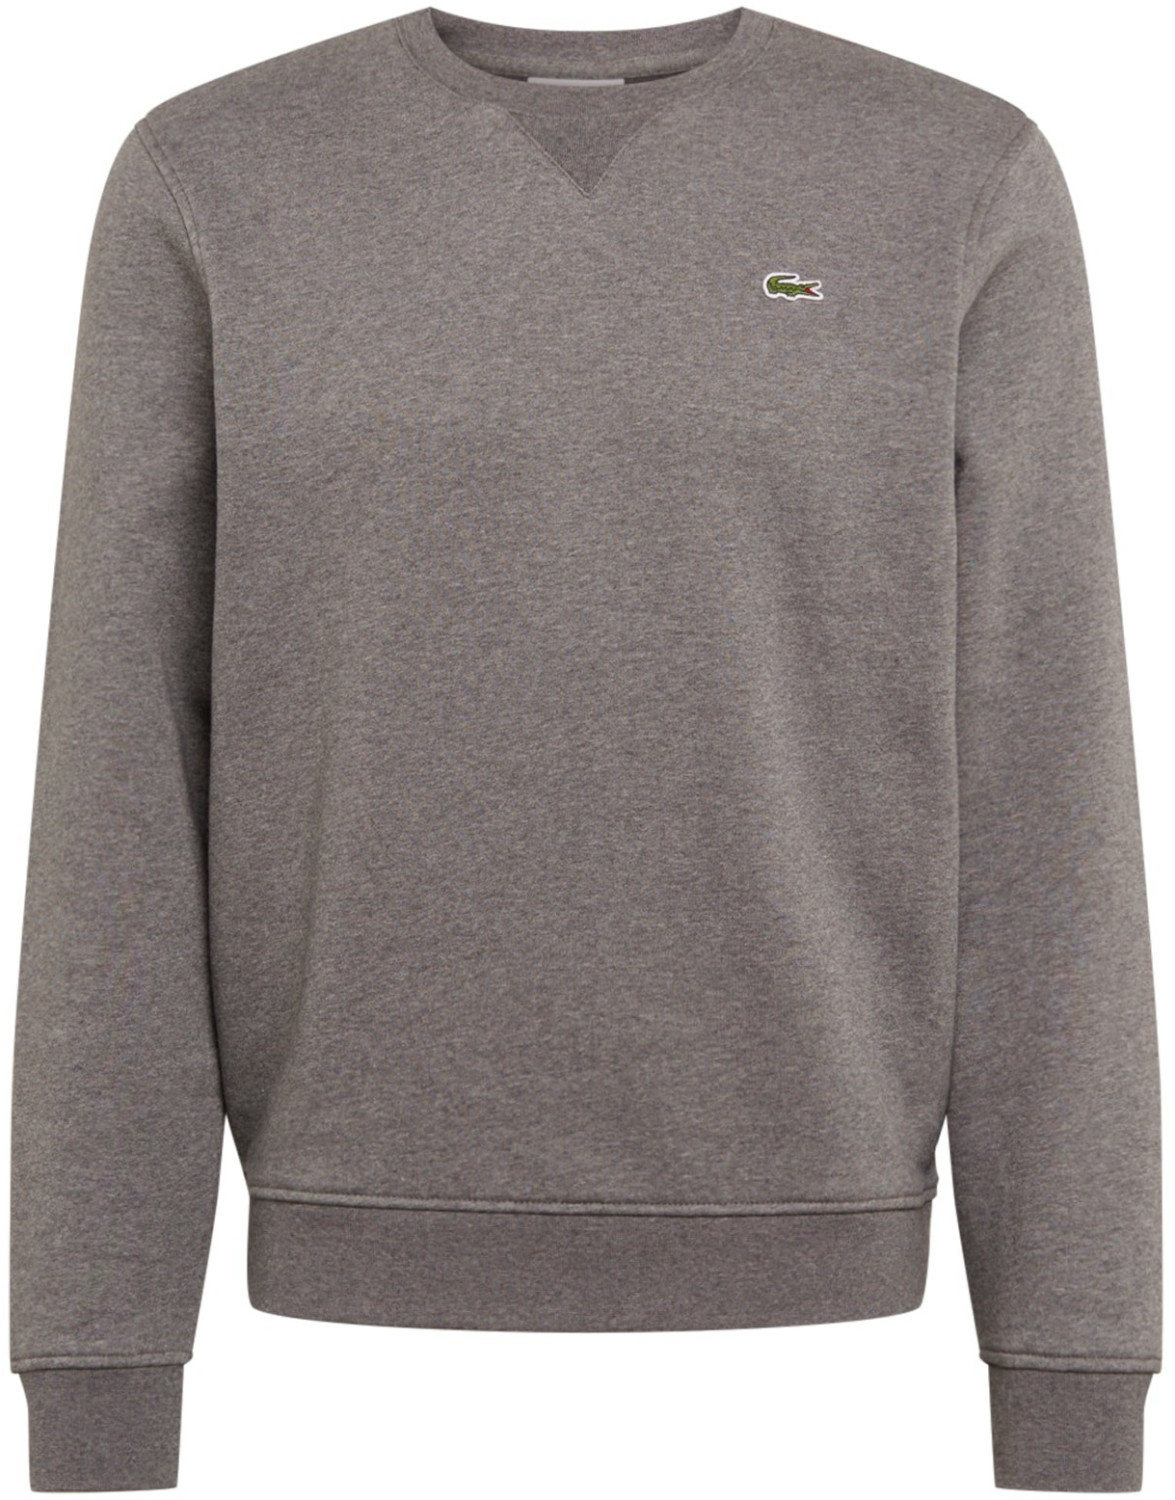 Buy Lacoste Sweatshirt (SH1505) graphite from £79.00 (Today) – Best ...